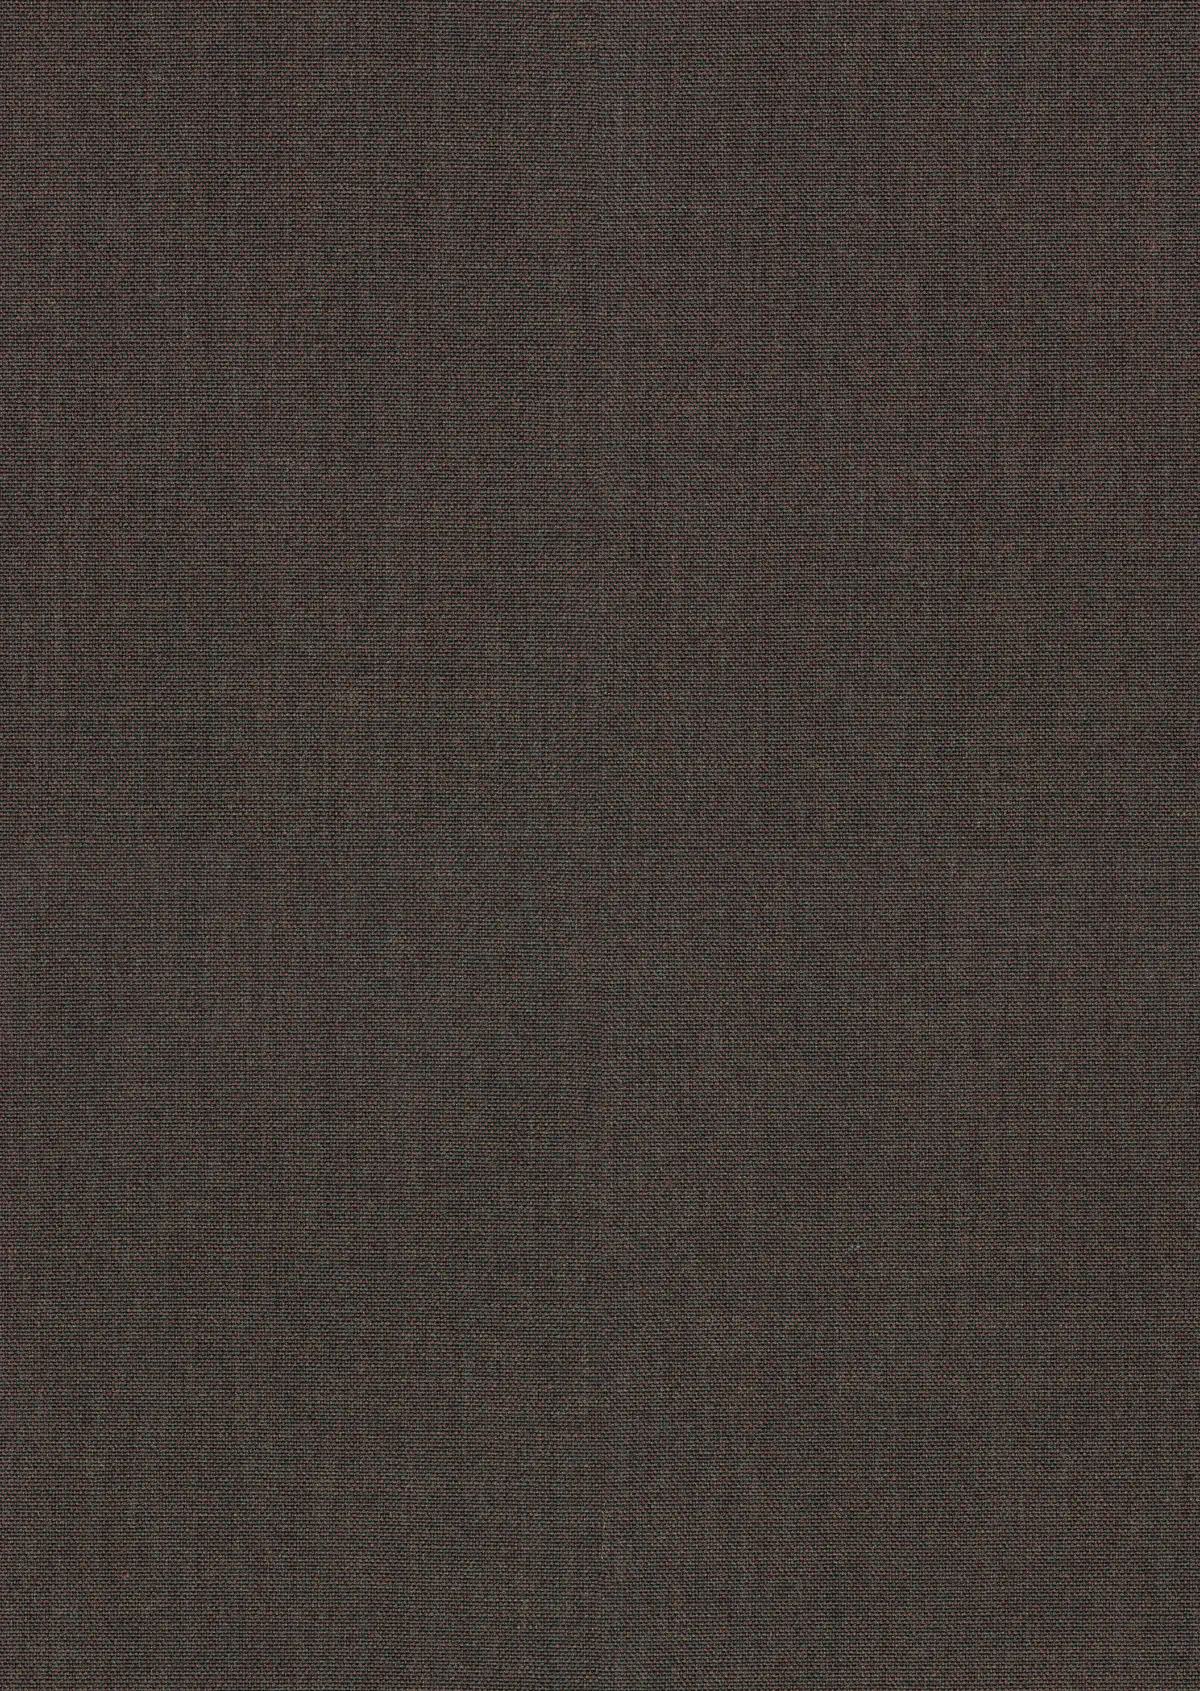 Fabric sample Remix 3 672 grey